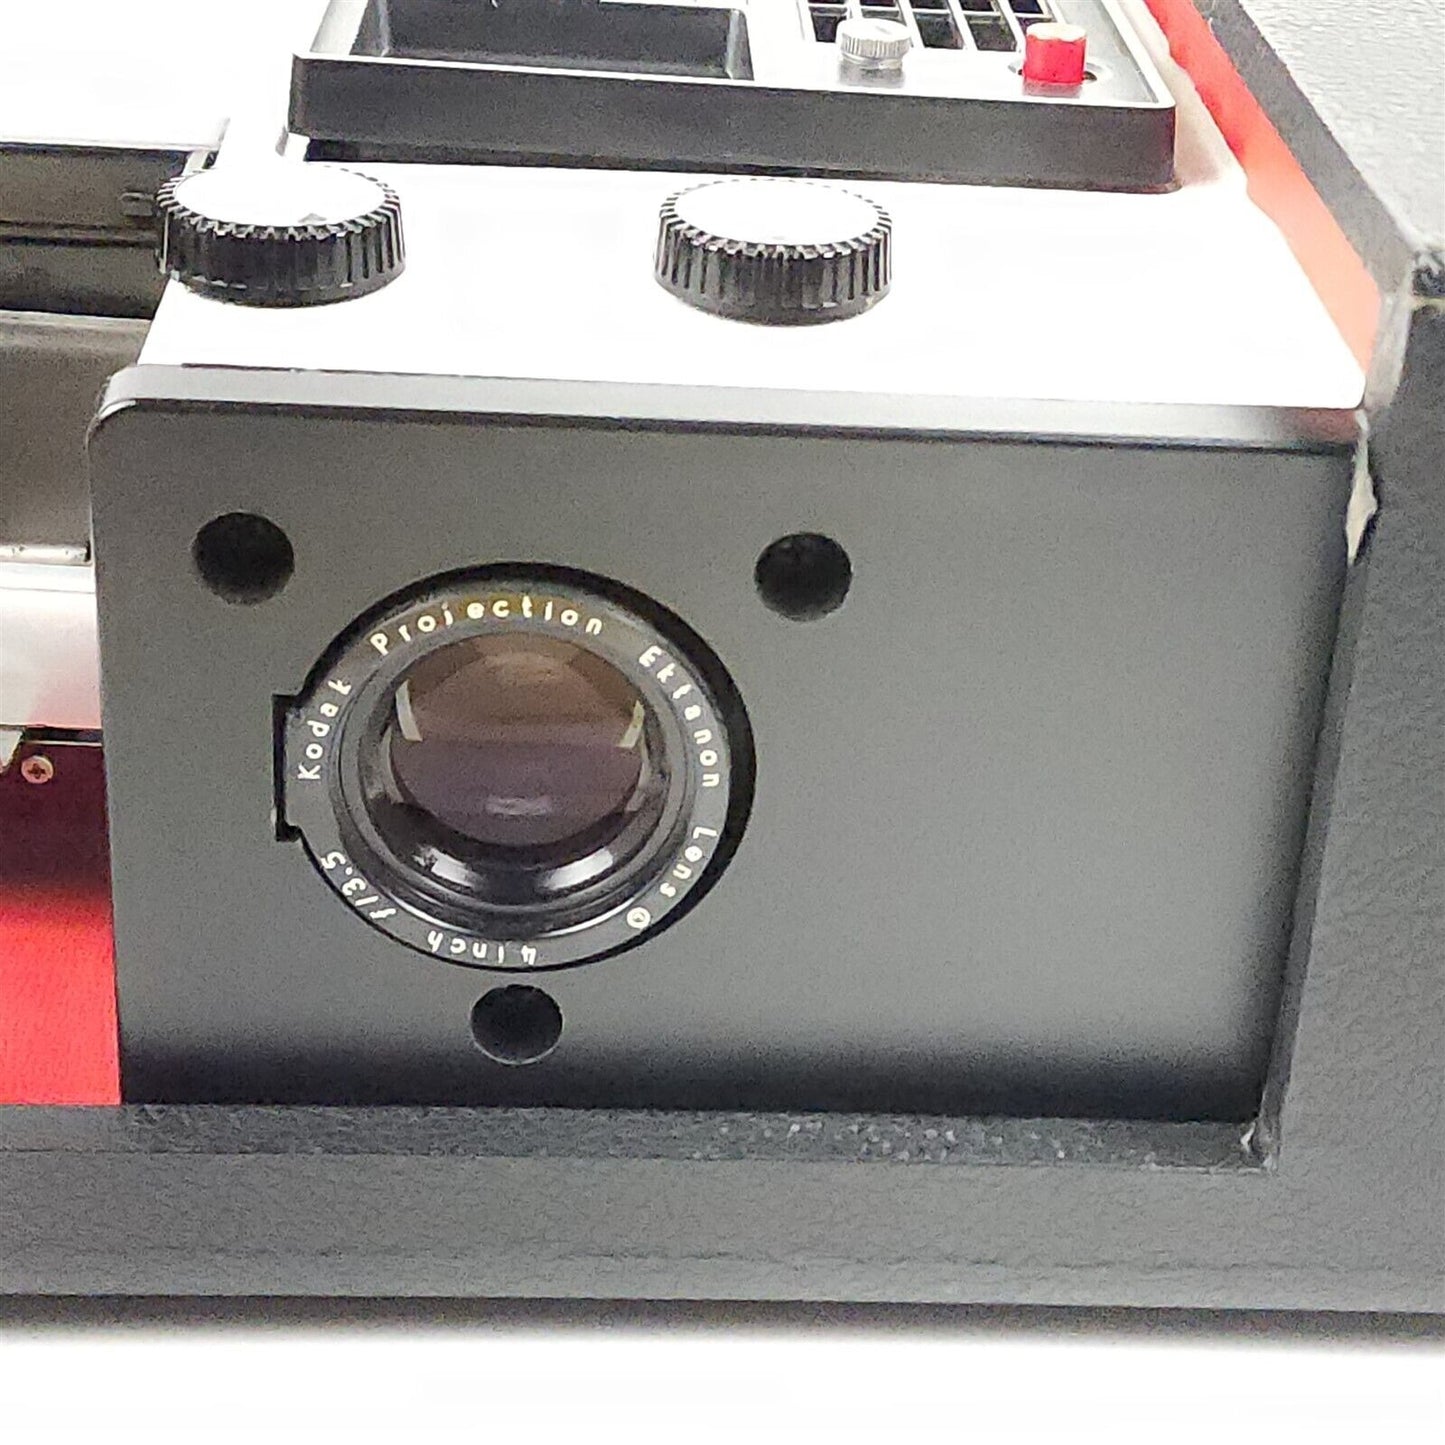 Vintage Kodak Supermatic 500 Slide Projector w/ Remote & Case